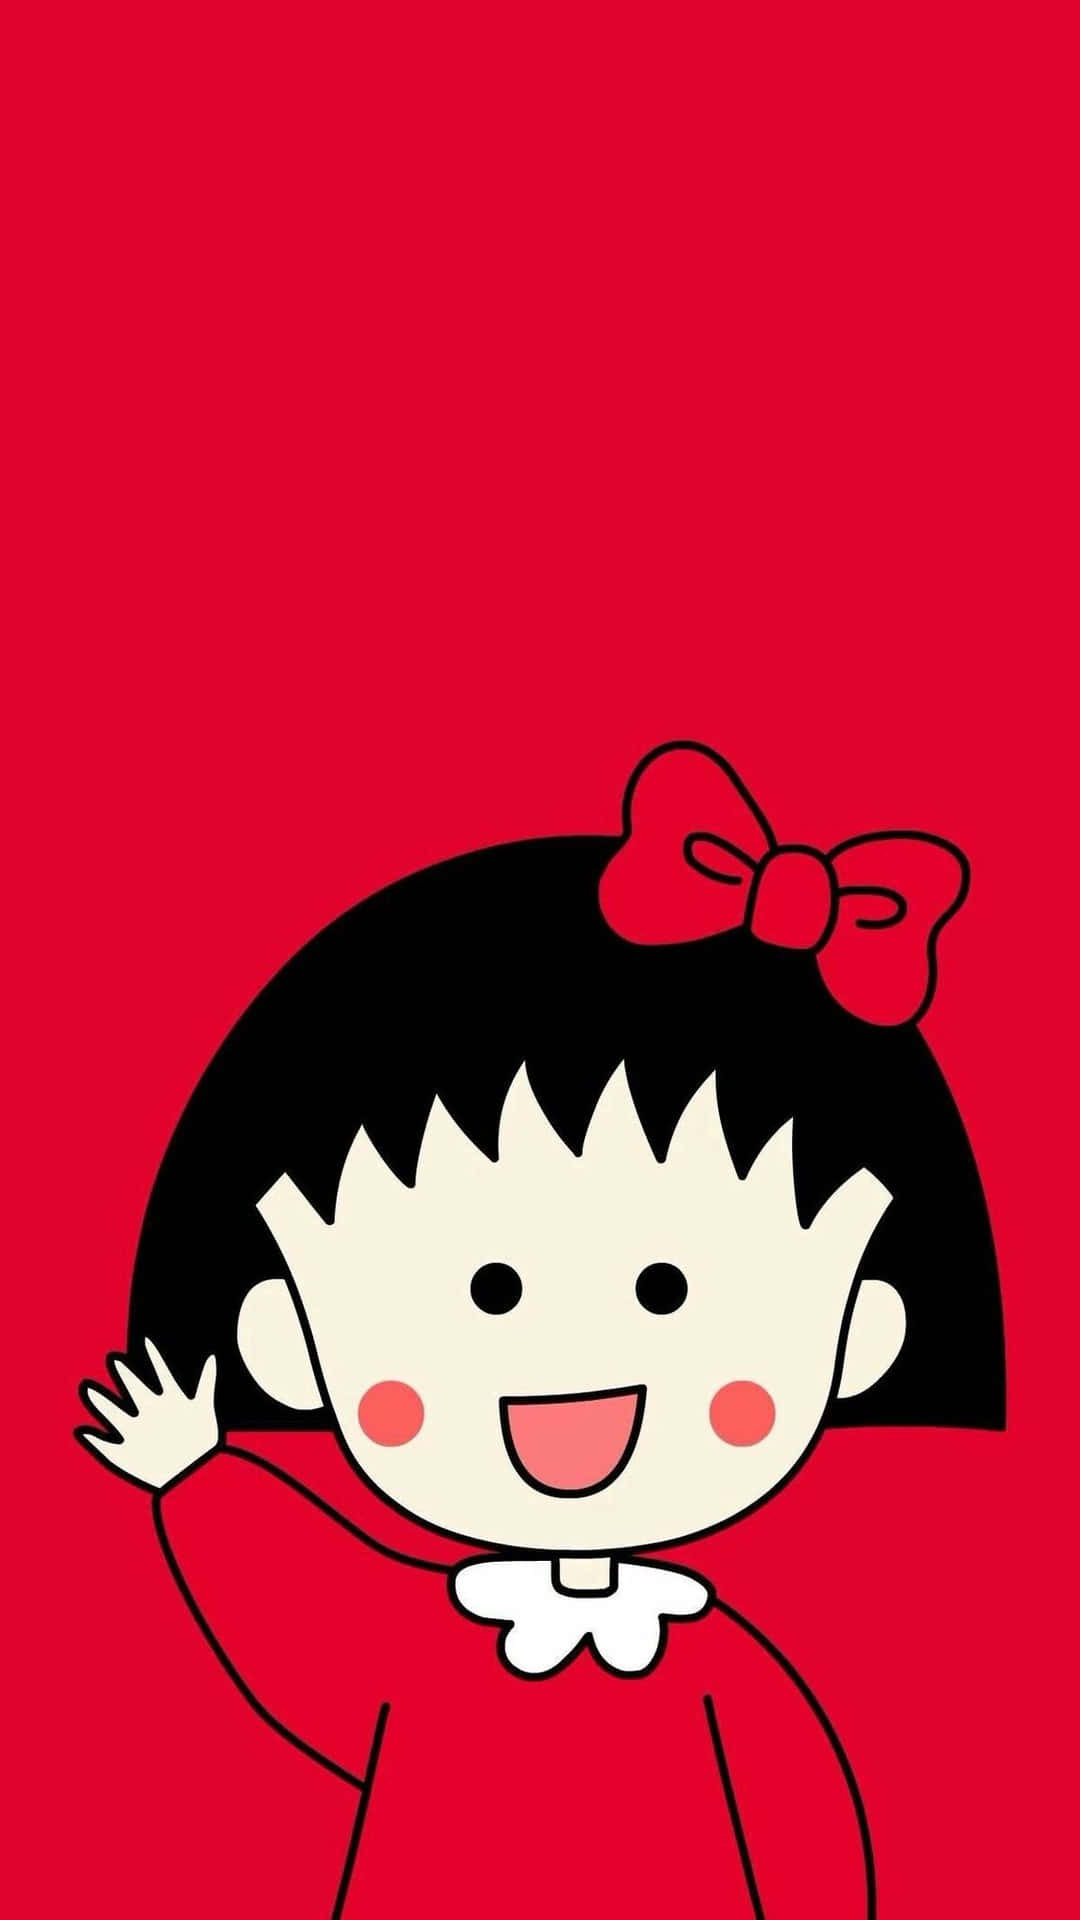 A Cartoon Girl In Red Dress Waving Her Hand Wallpaper